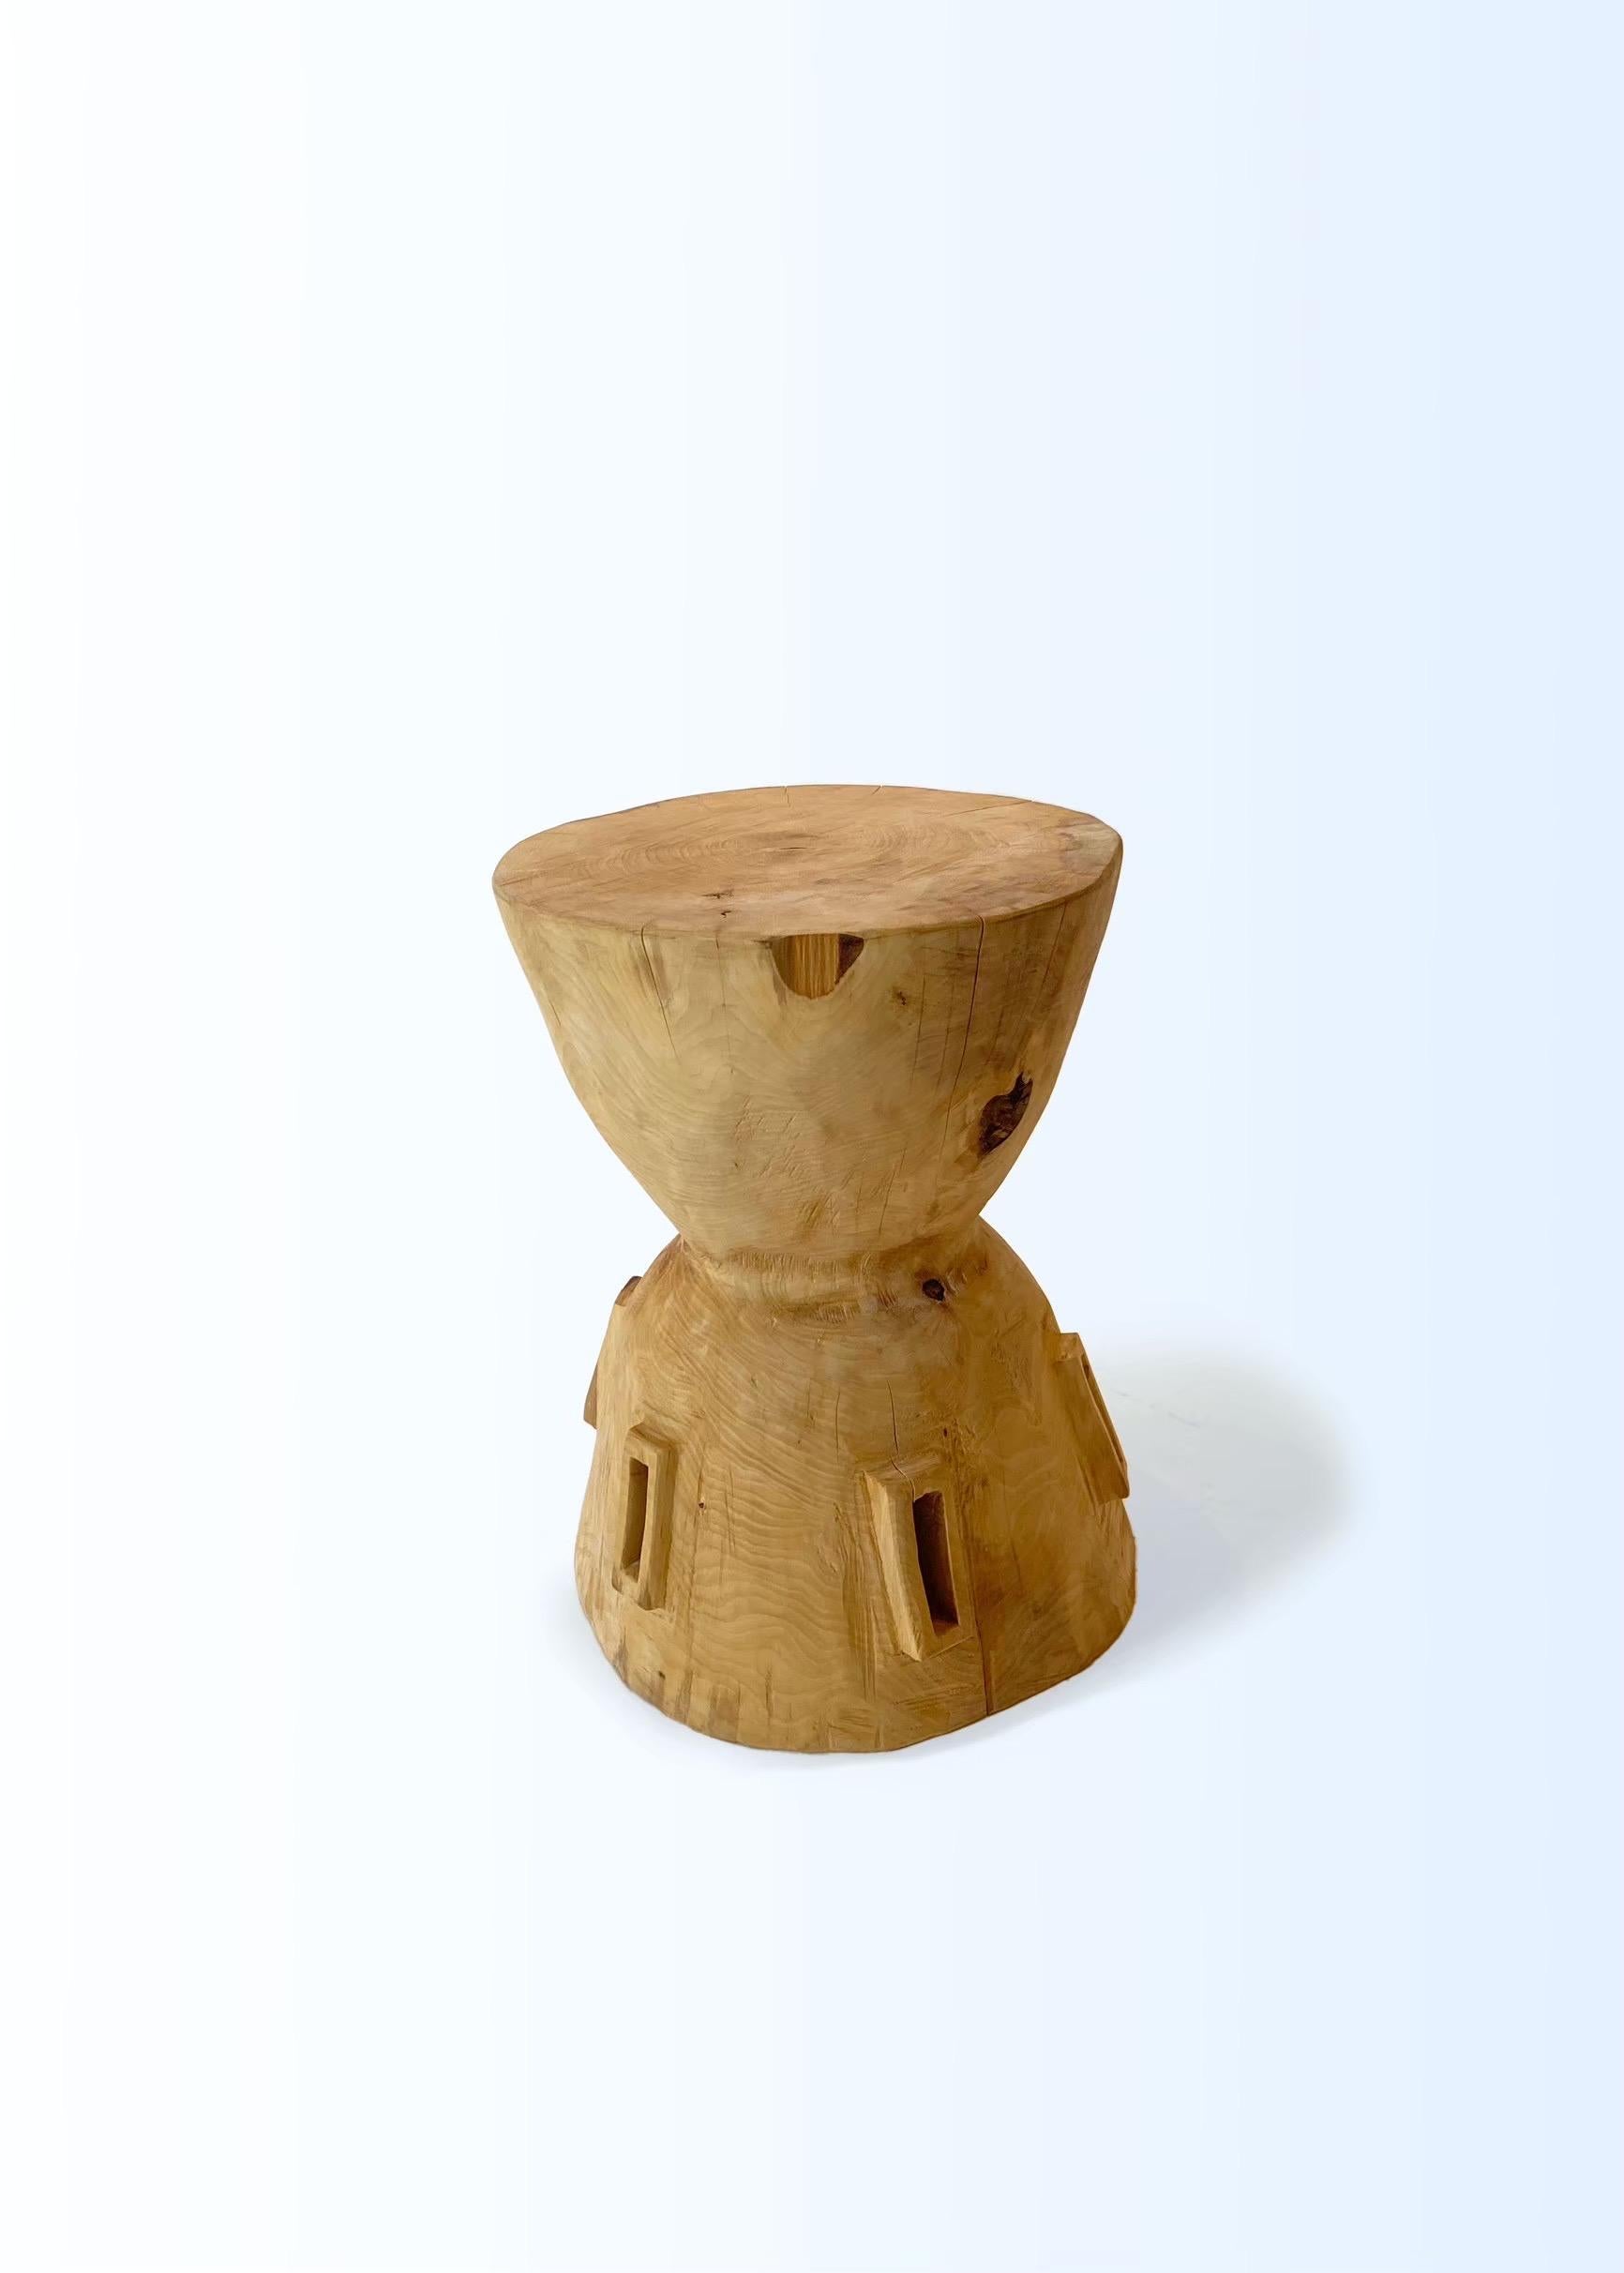 Japanese Hiroyuki Nishimura Furniture Sculptural Wood Stool 1  Tribal Glamping For Sale